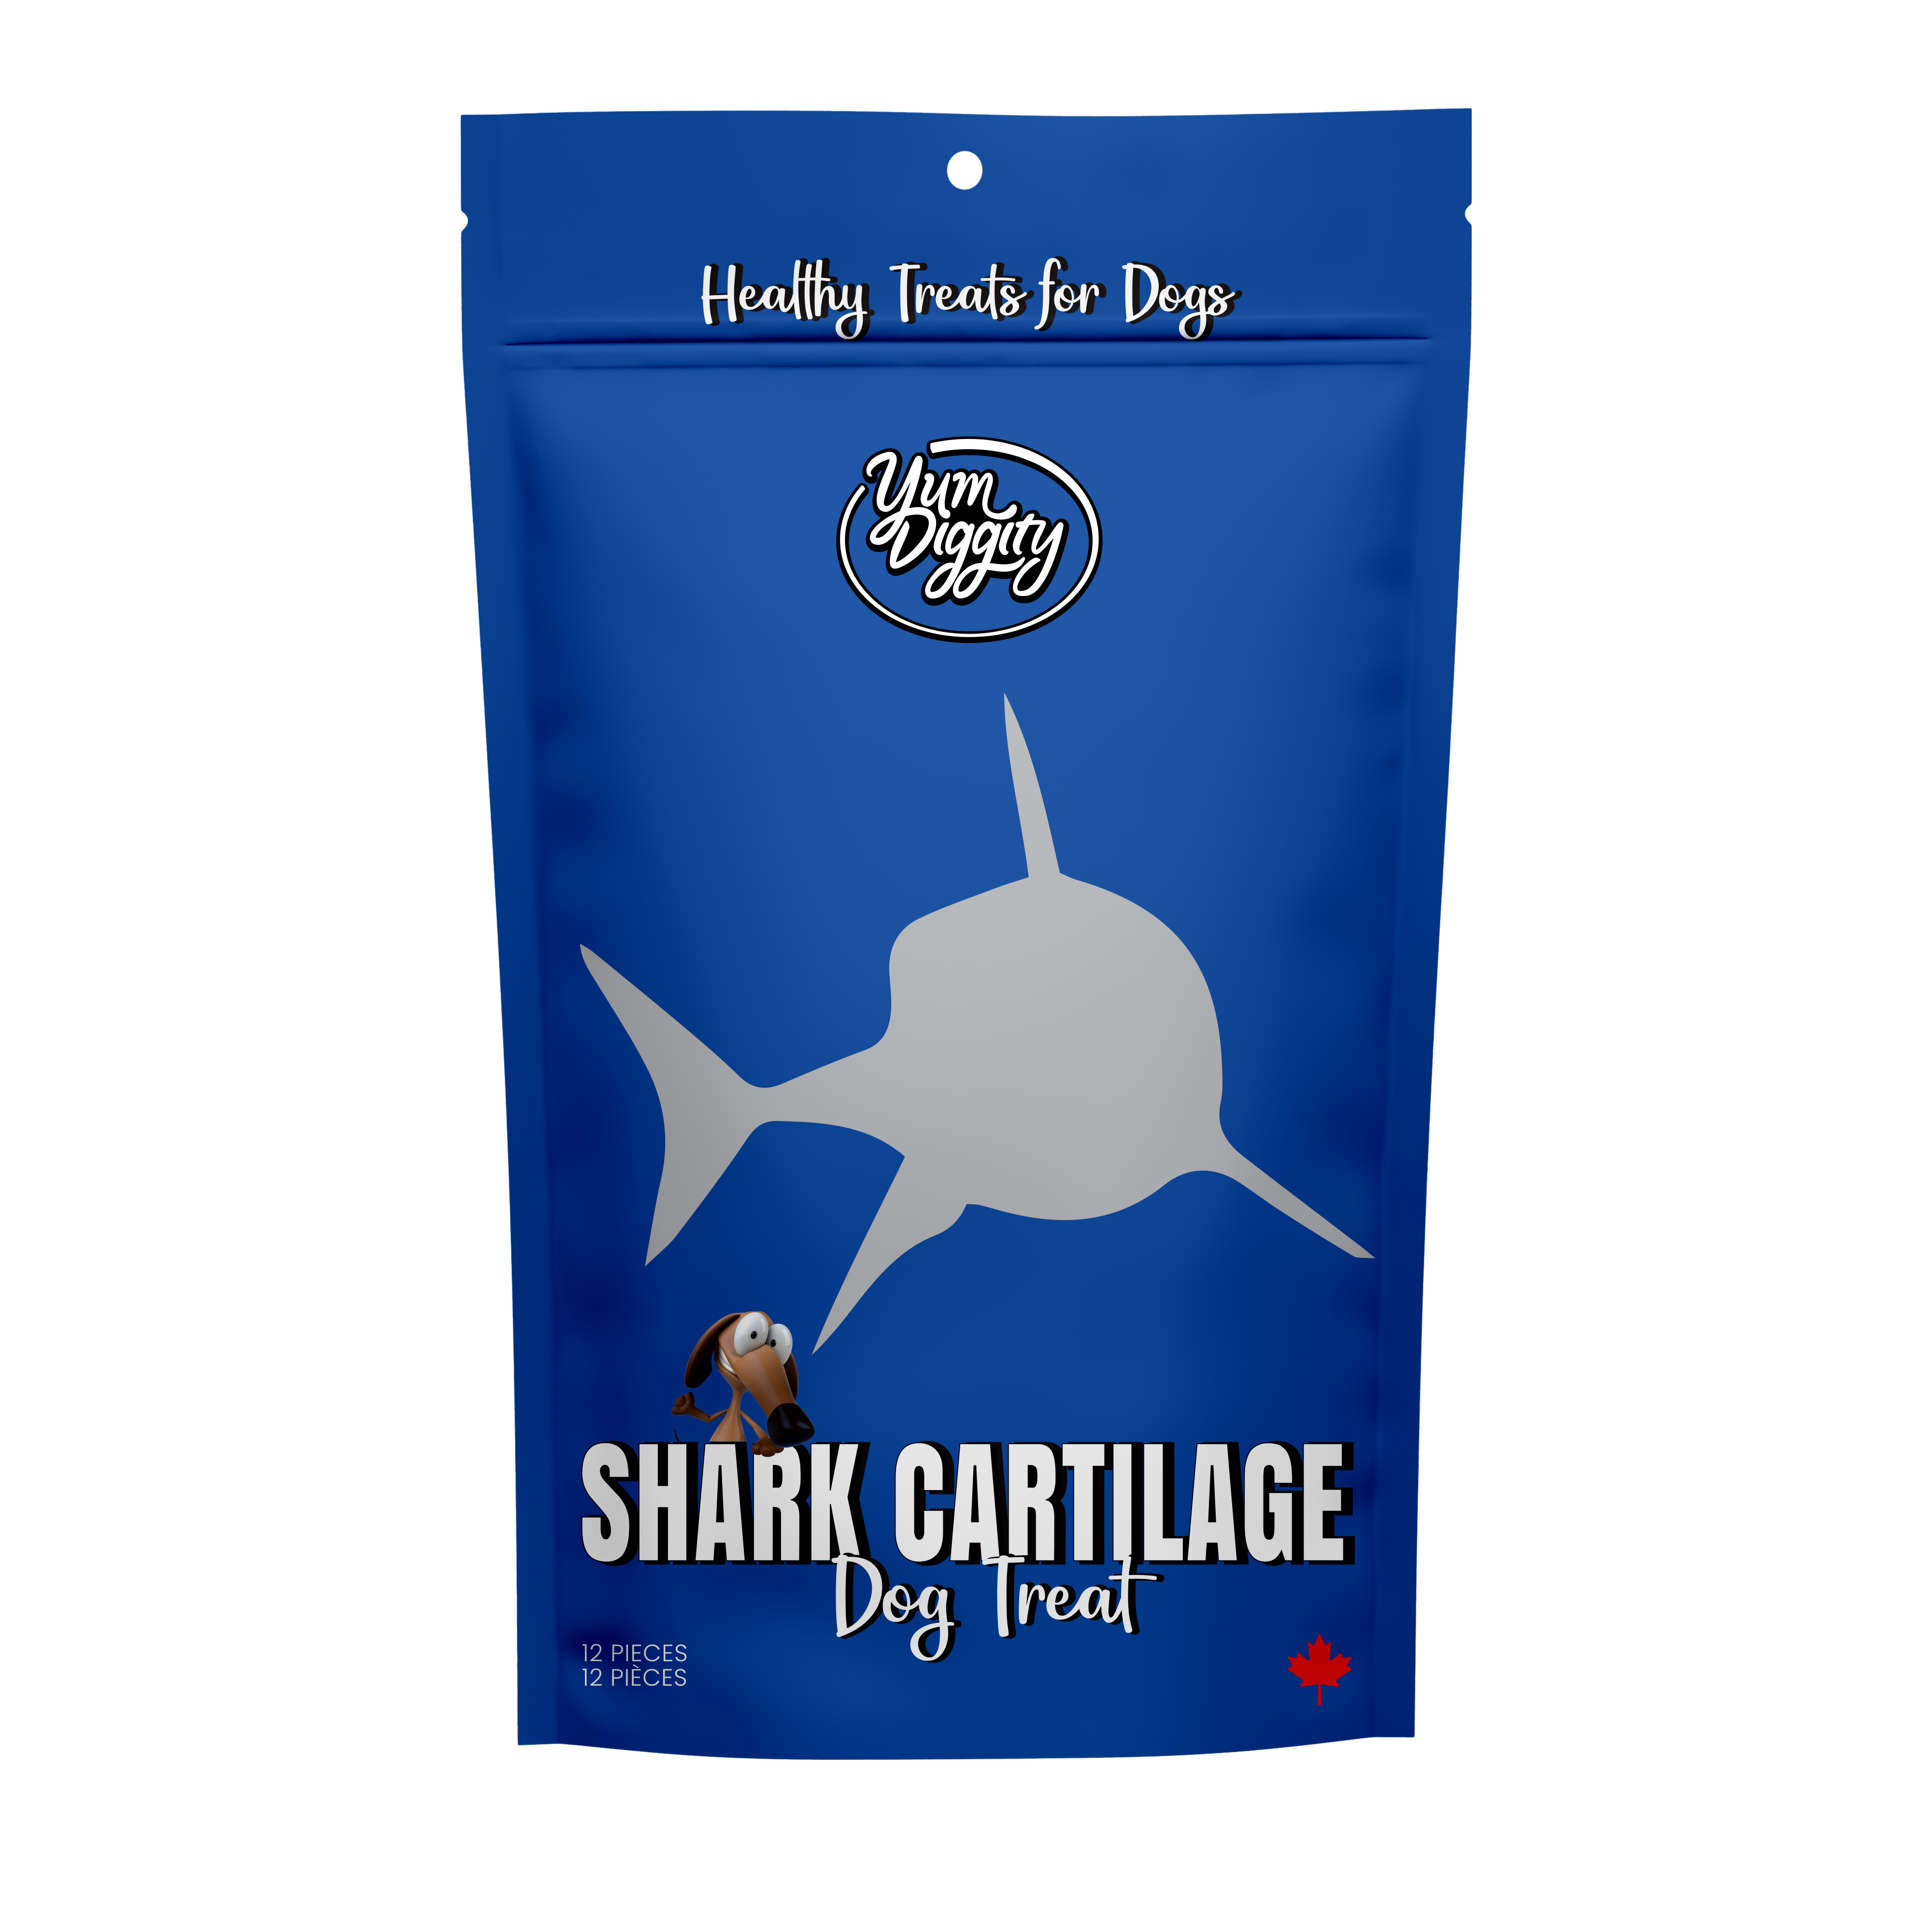 Yum Diggity - Shark Cartilage